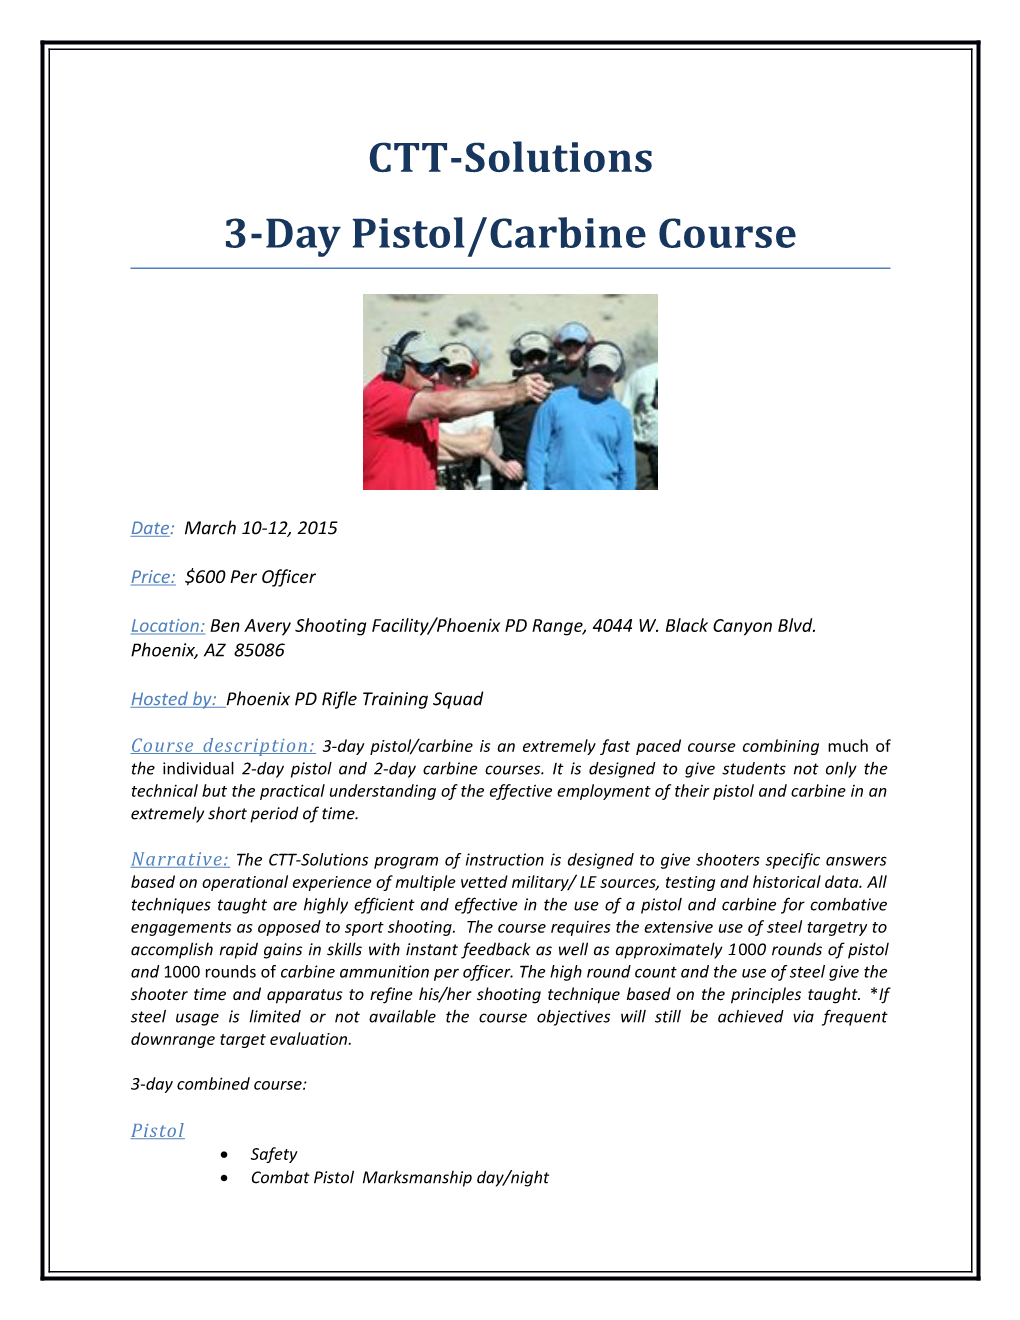 3-Day Pistol/Carbine Course